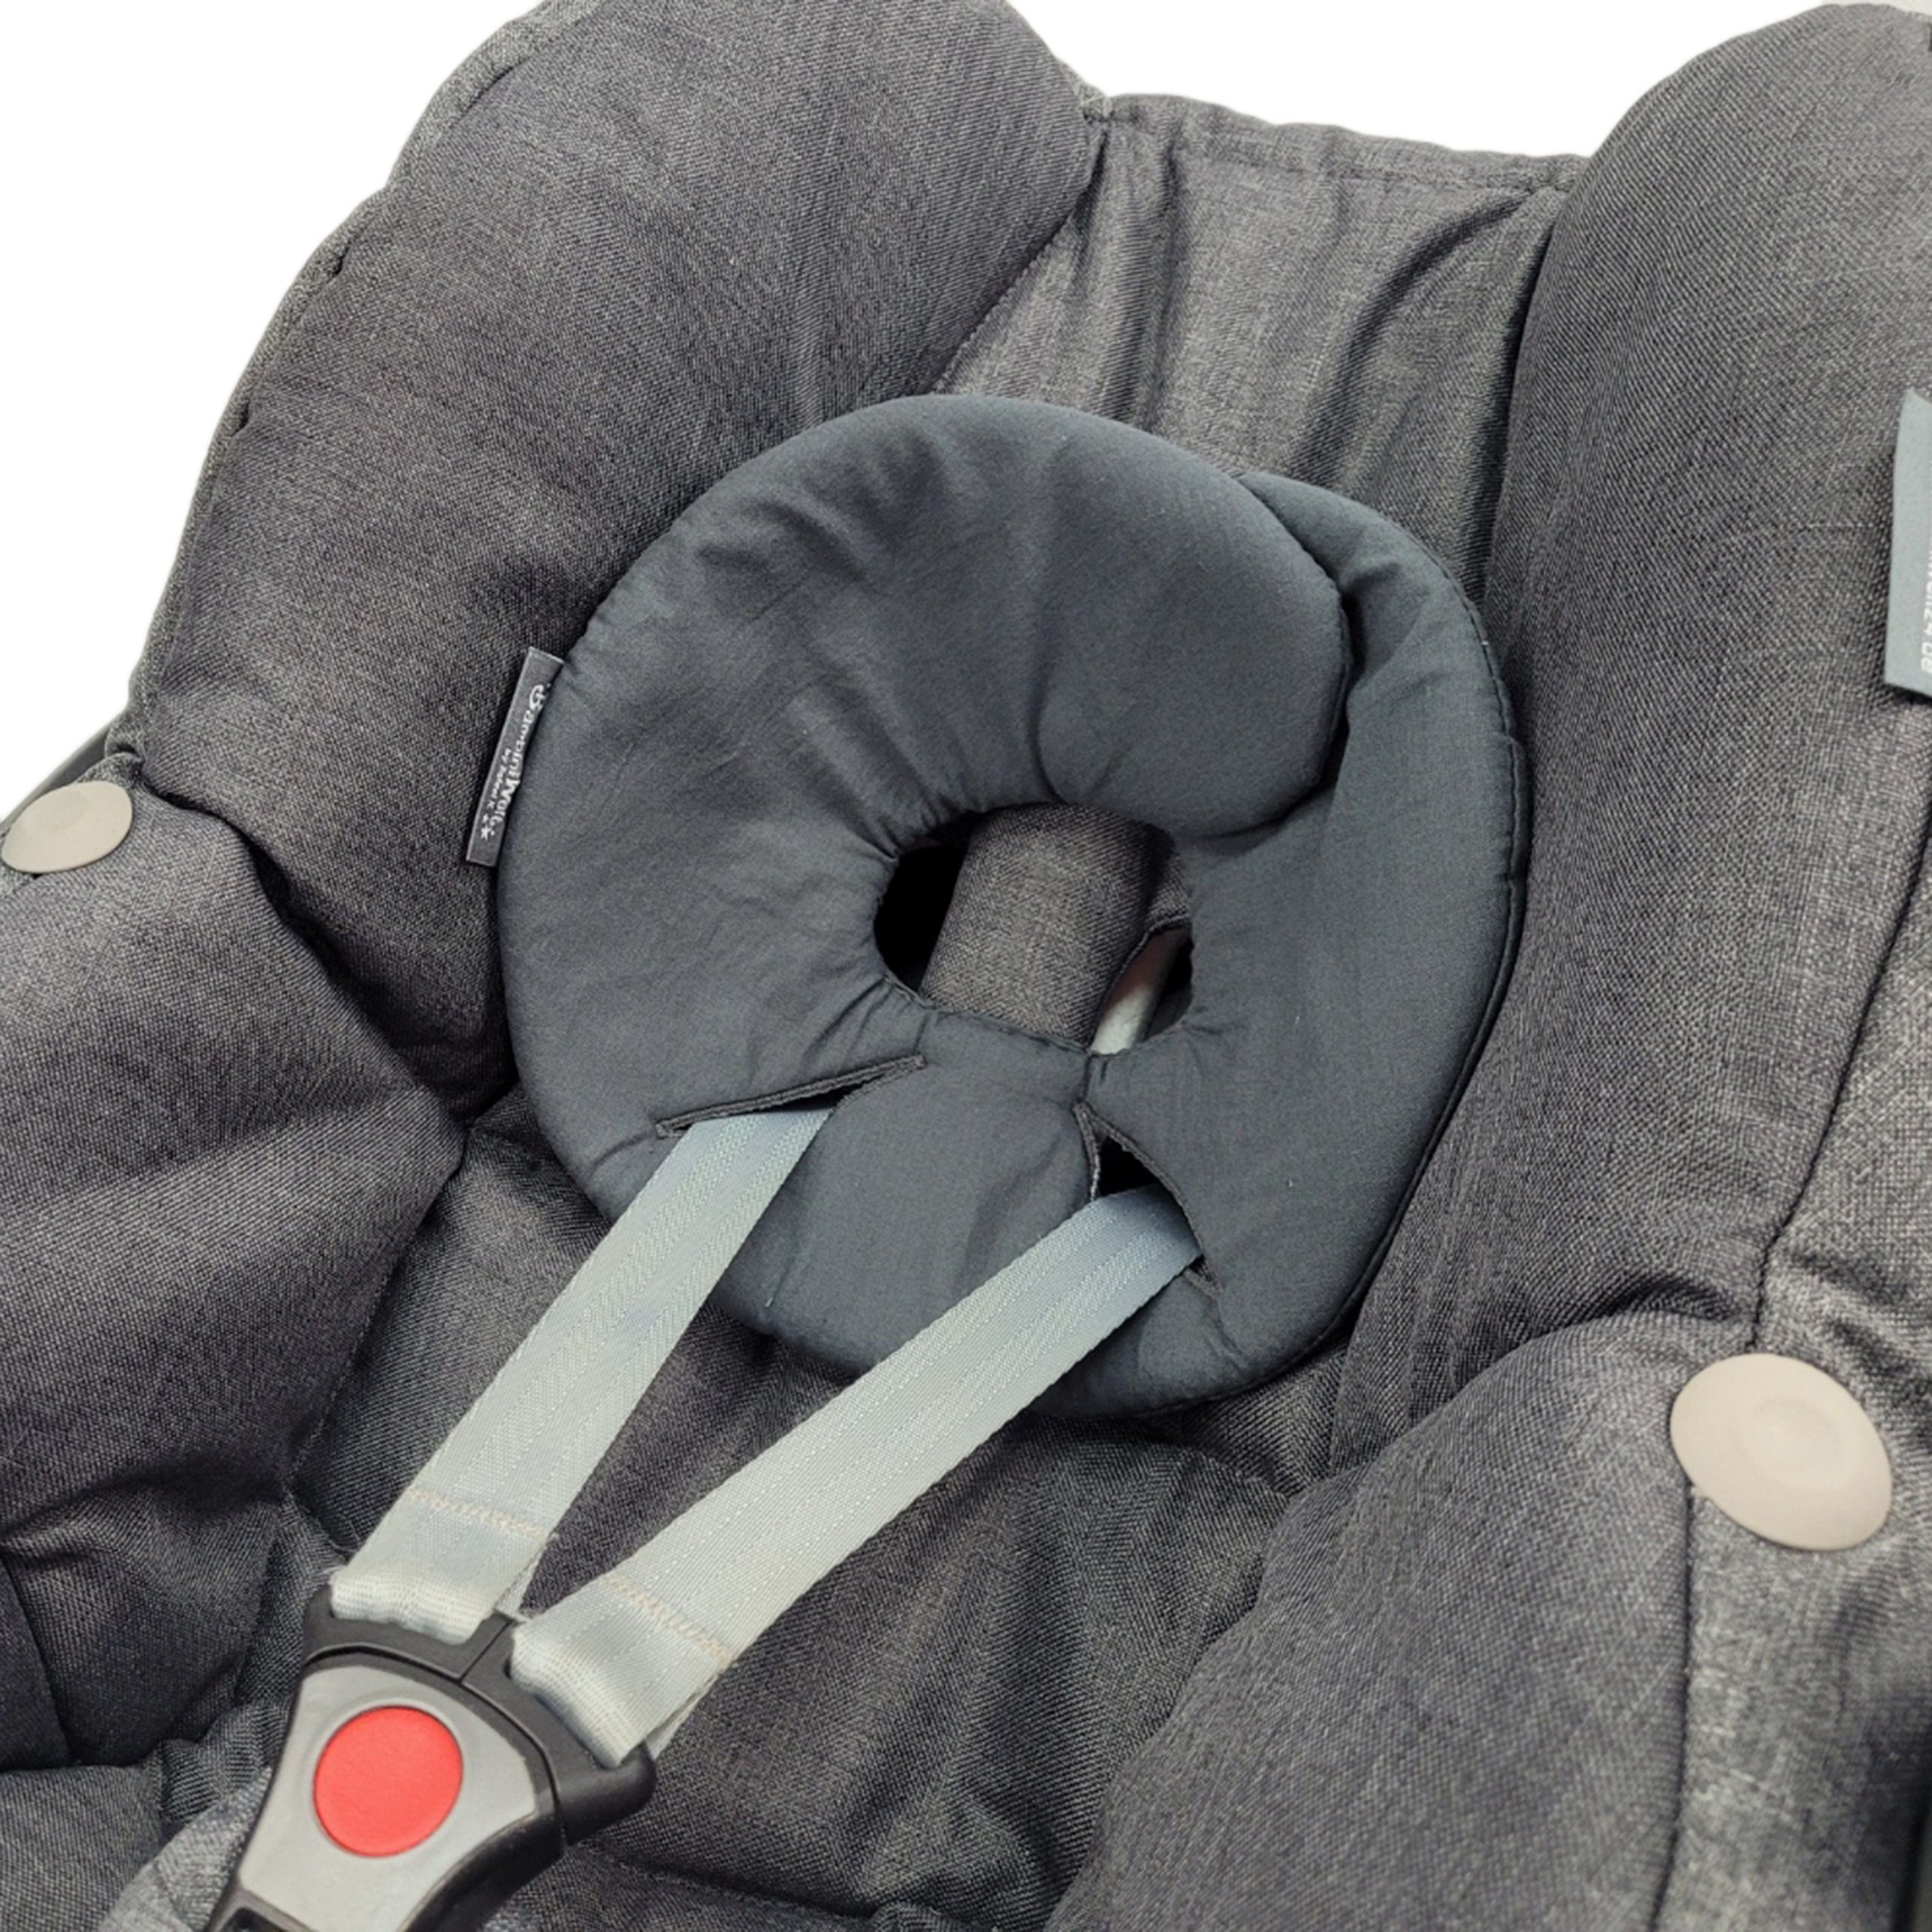 BambiniWelt by Rafael K. Babyschale Kopfpolster für Babyschale kompatibel mit Maxi-Cosi Pebble/Pebble Plus, ab: Geburt, bis: bis ca. 14 Monate Baumwolle dunkelgrau